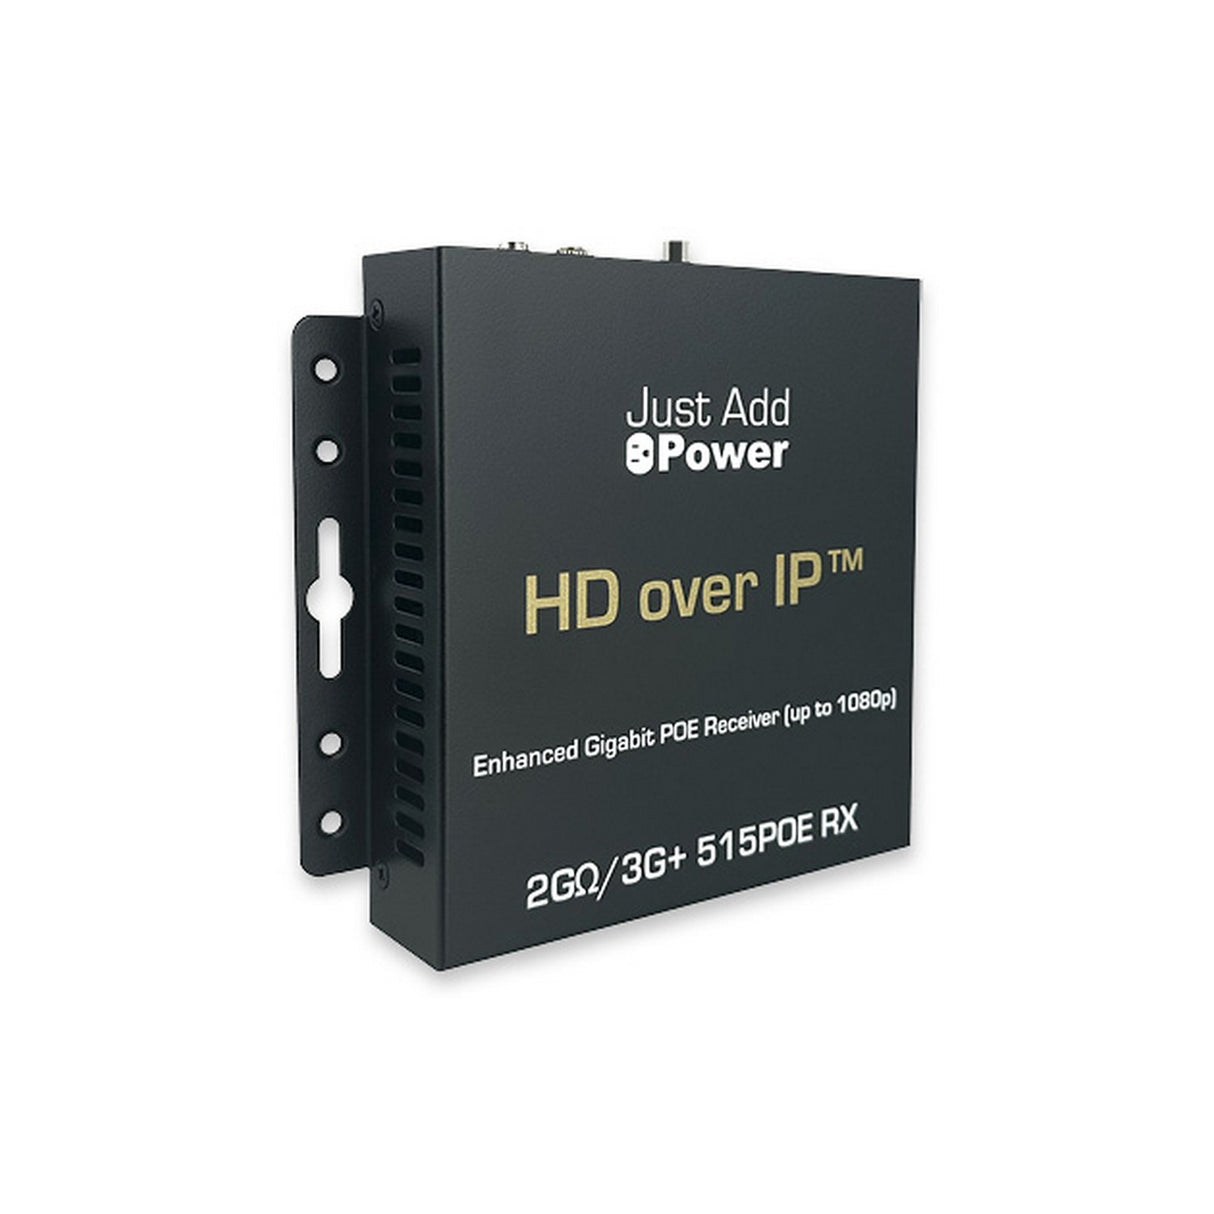 Just Add Power 2G/3G+ OMEGA 515POE HD over IP Enhanced Gigabit Receiver